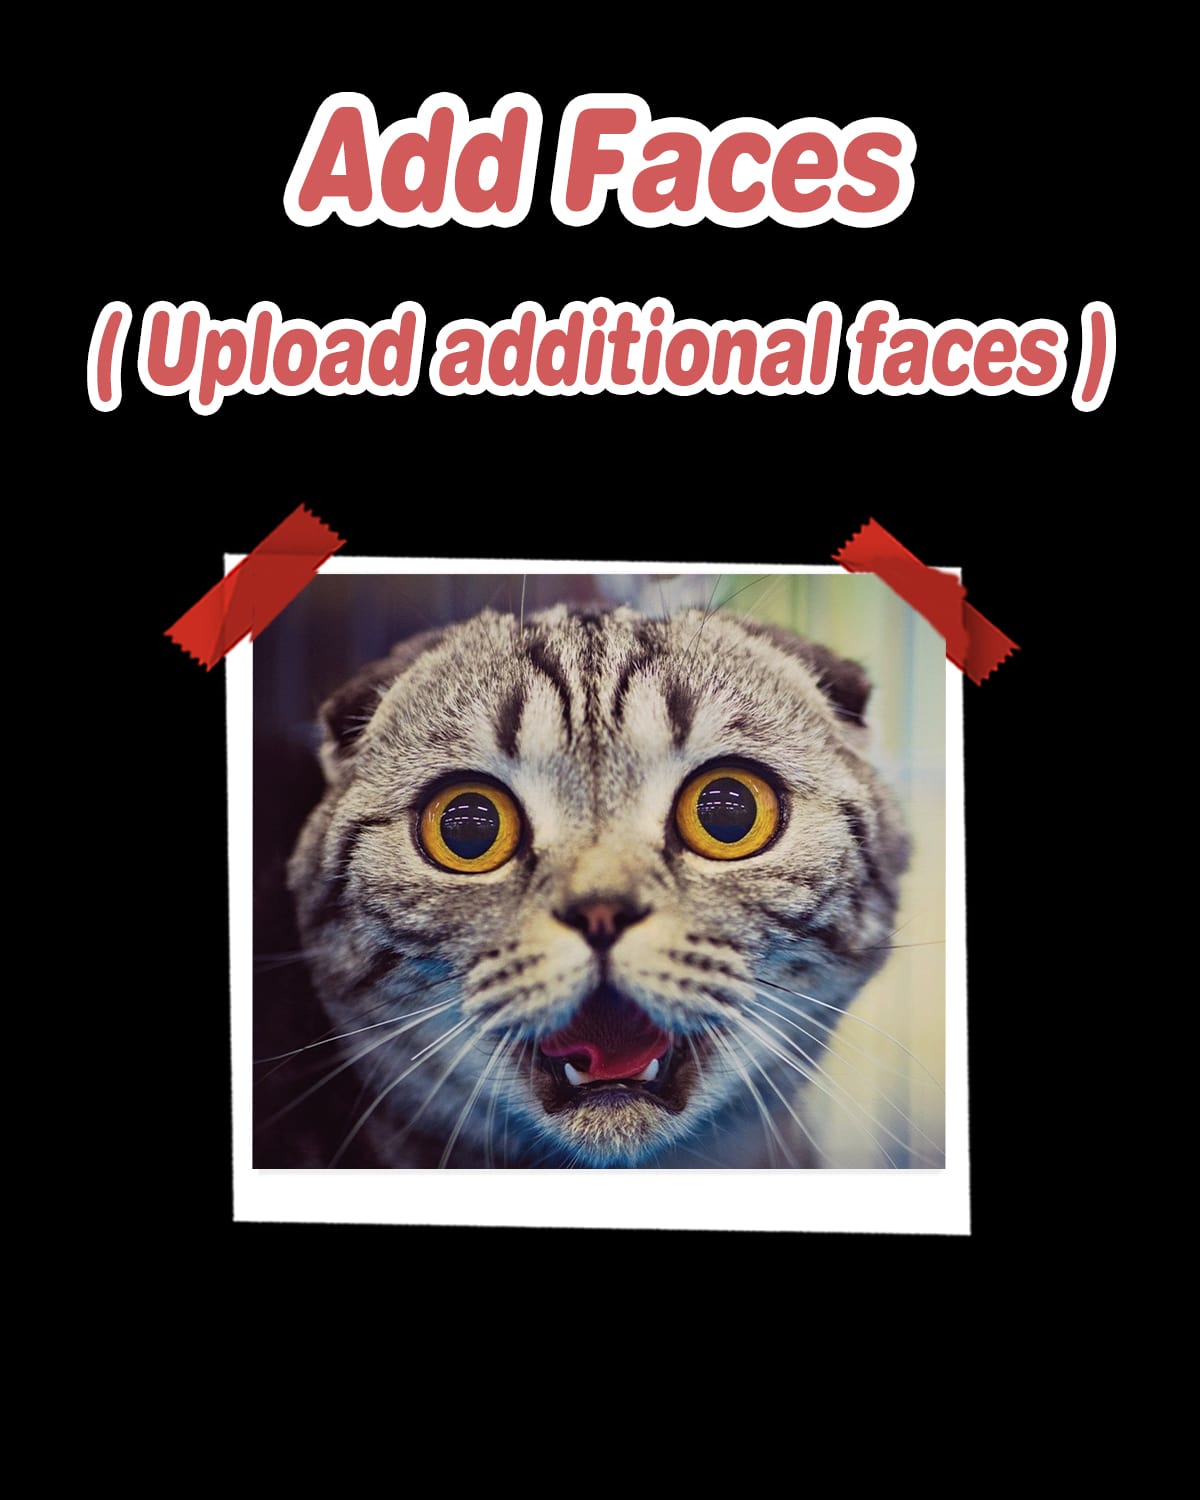 Add additional faces - ASDF Print